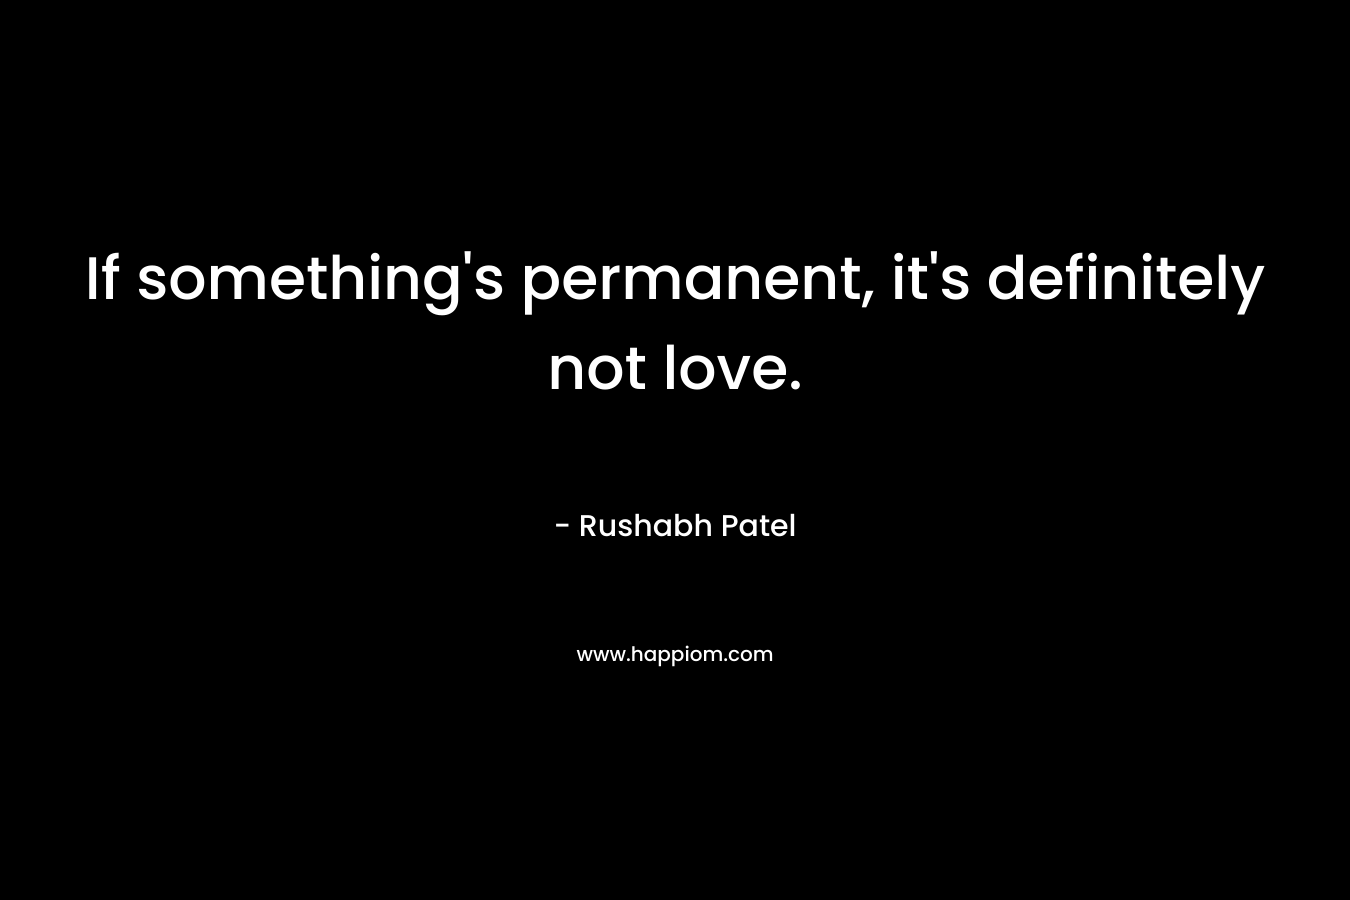 If something's permanent, it's definitely not love.